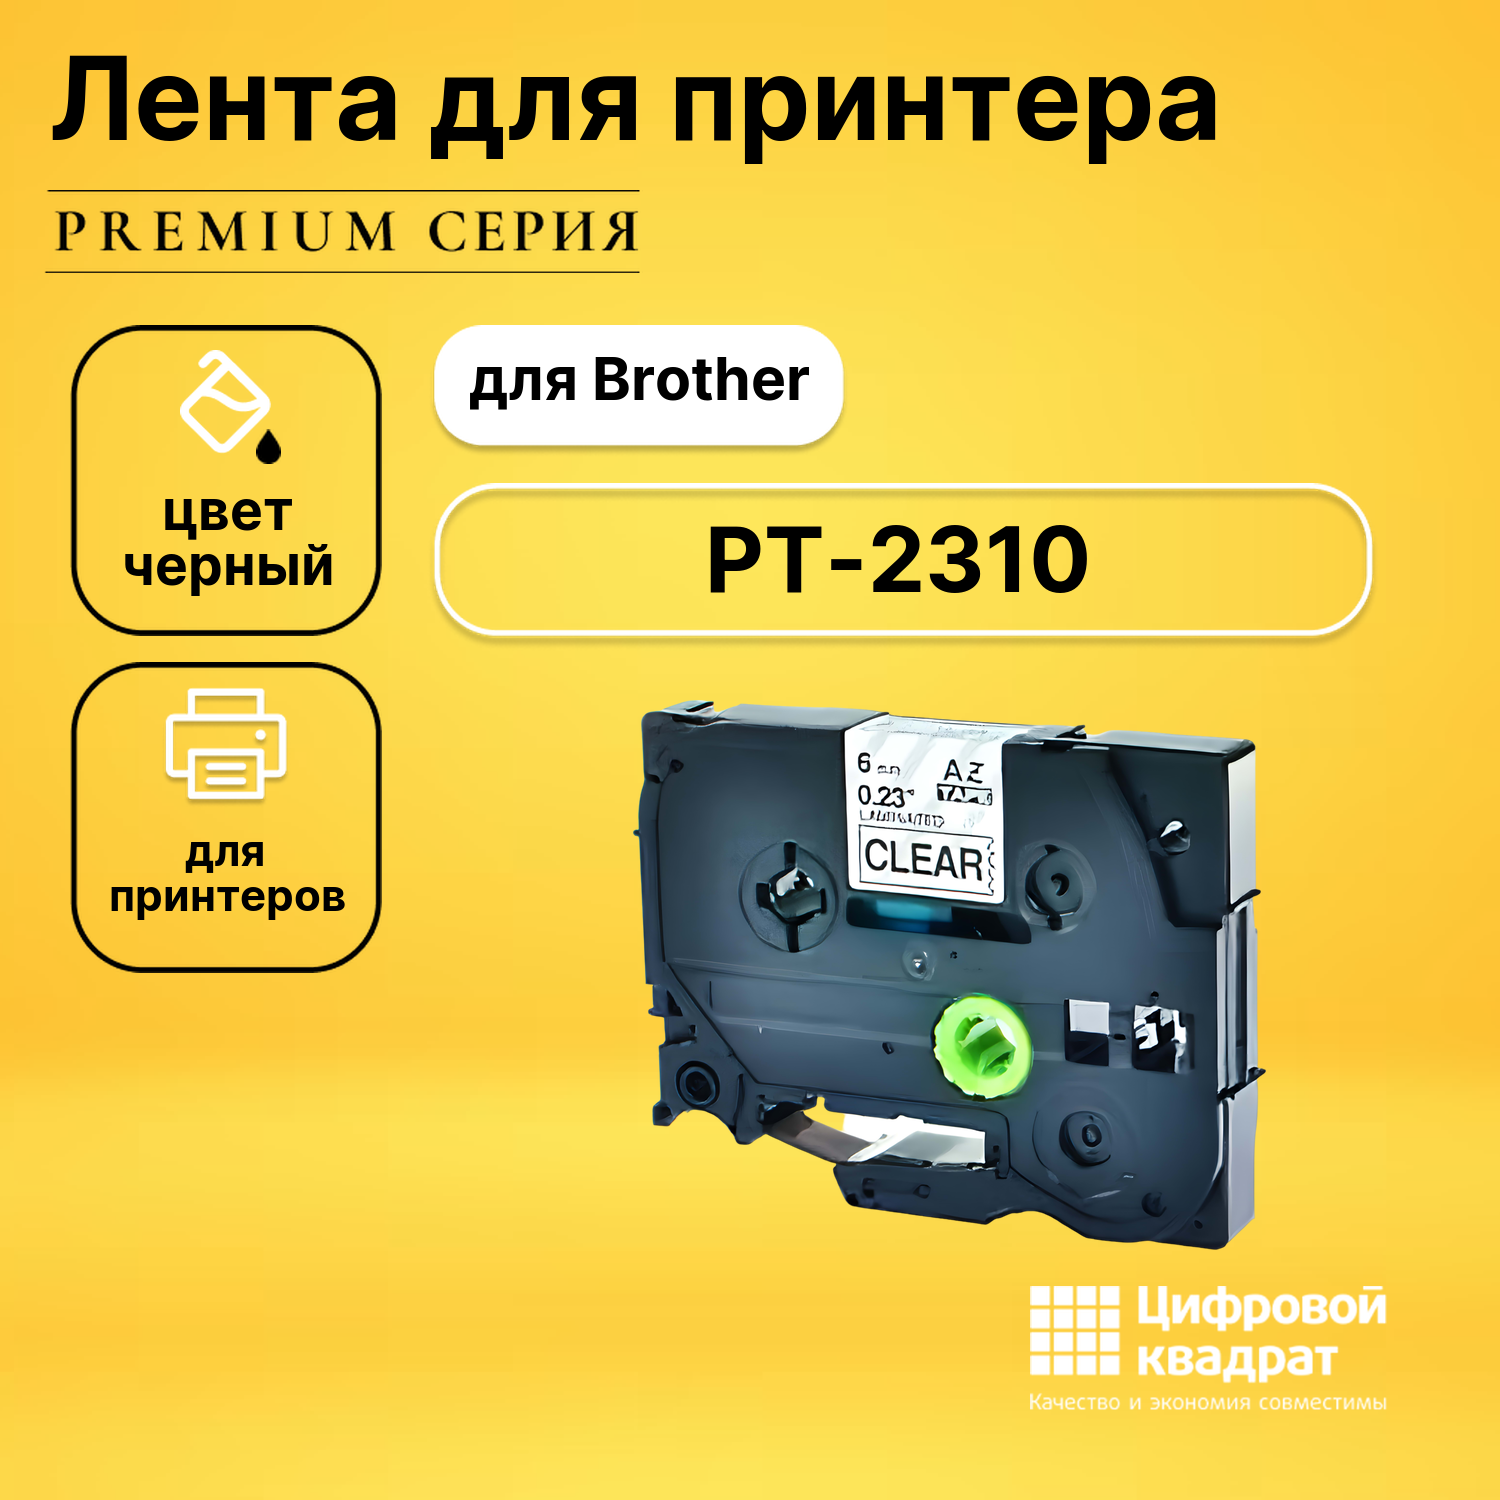 Лента для печати этикеток и наклеек для Brother PT-2310